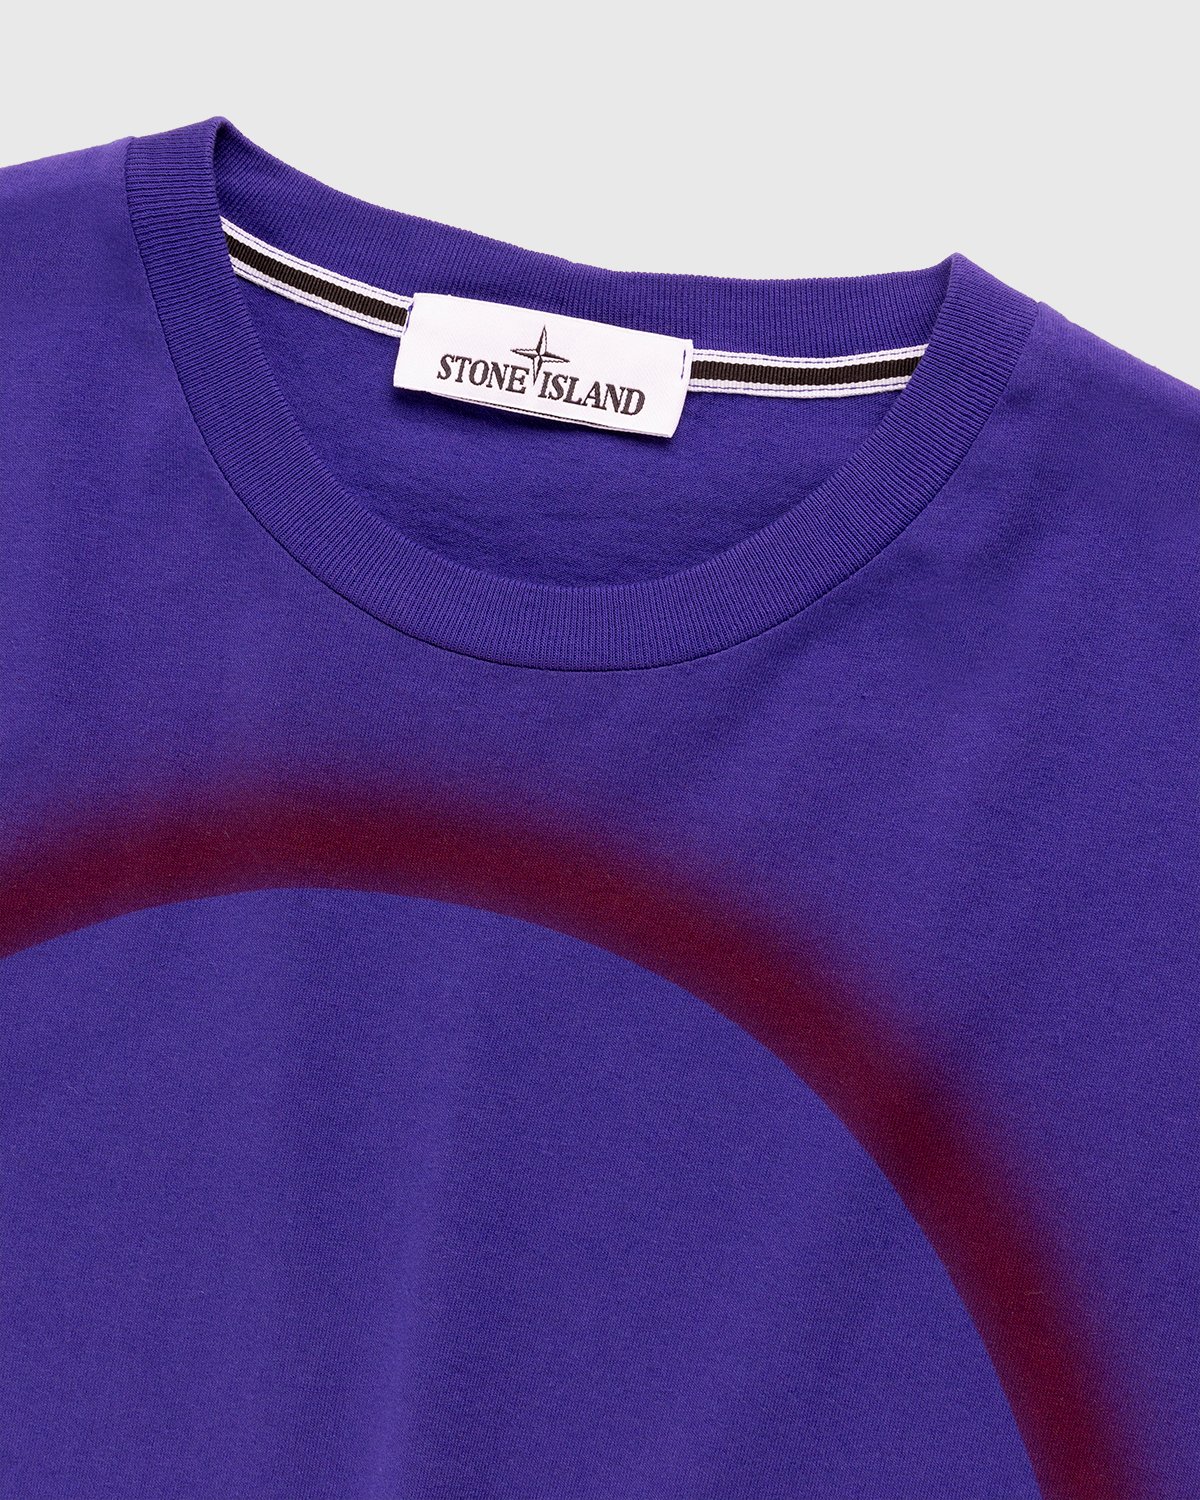 Stone Island - 2NS95 Garment-Dyed Solar Eclipse One T-Shirt Bright Blue - Clothing - Blue - Image 4